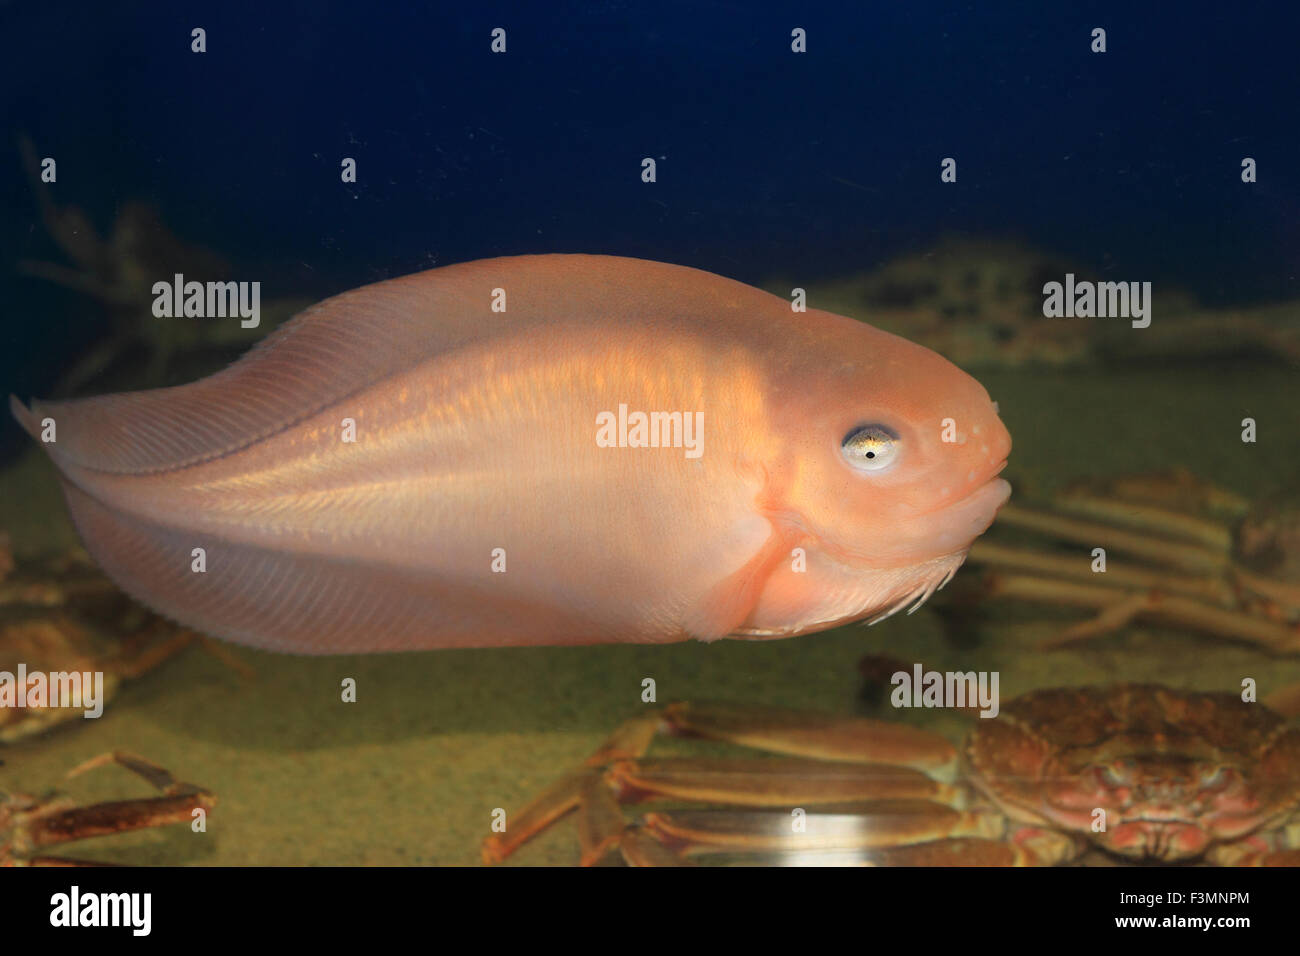 Salmon Snailfish (Careproctus rastrinus) in Japan Stock Photo